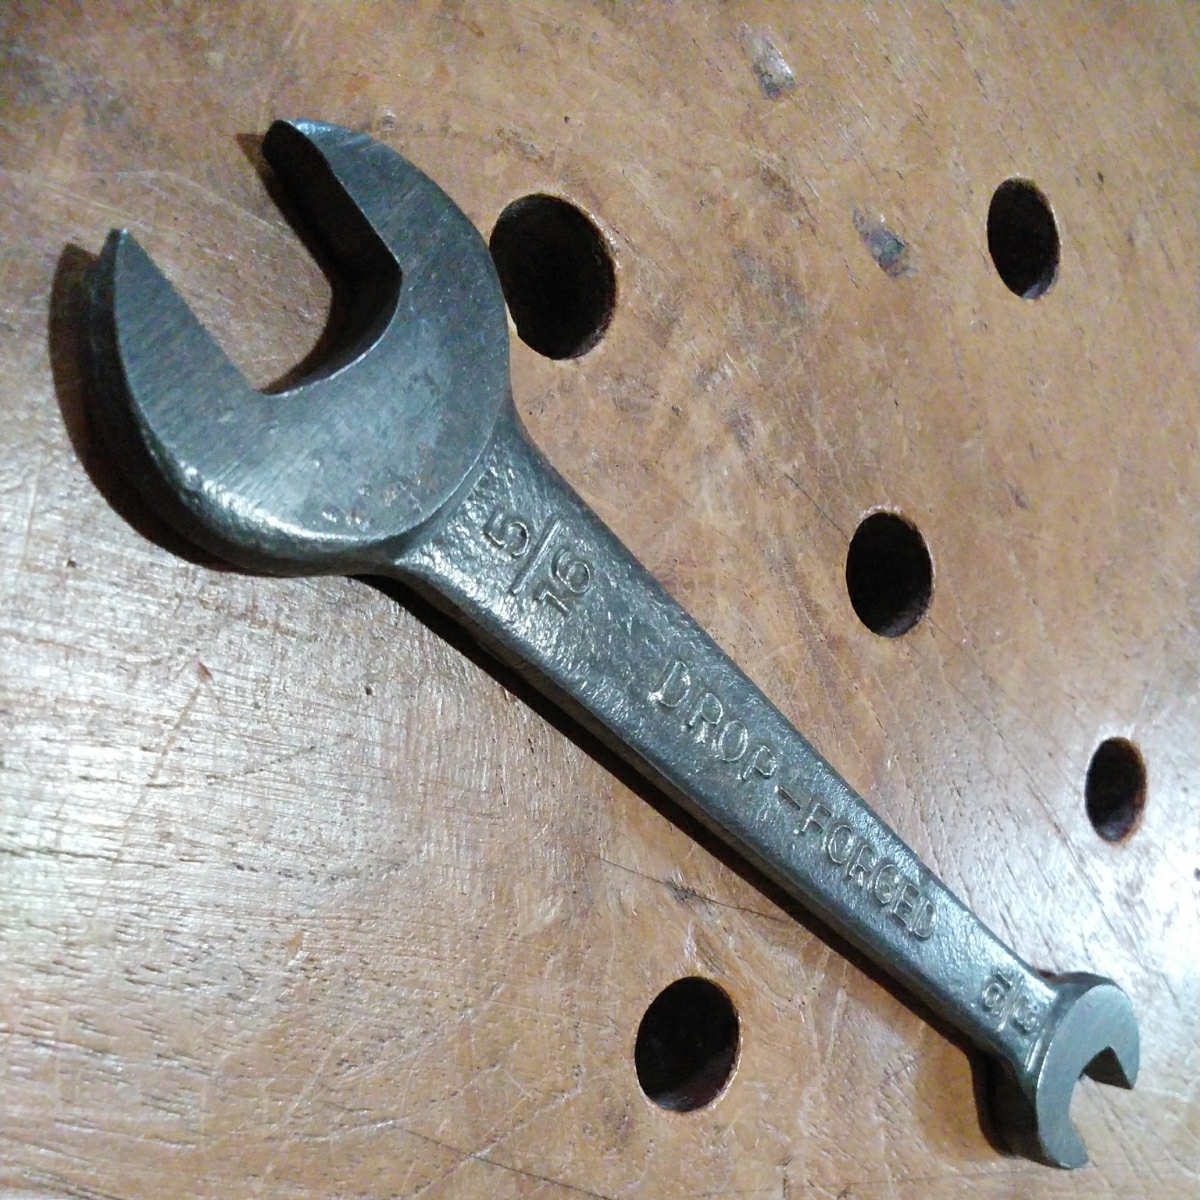 FUJI PEACE maintenance for tool combination wrench combination wrench size inscription 3/16-5/16 -inch 10-14mm. total length 139.7mm. -inch tool 